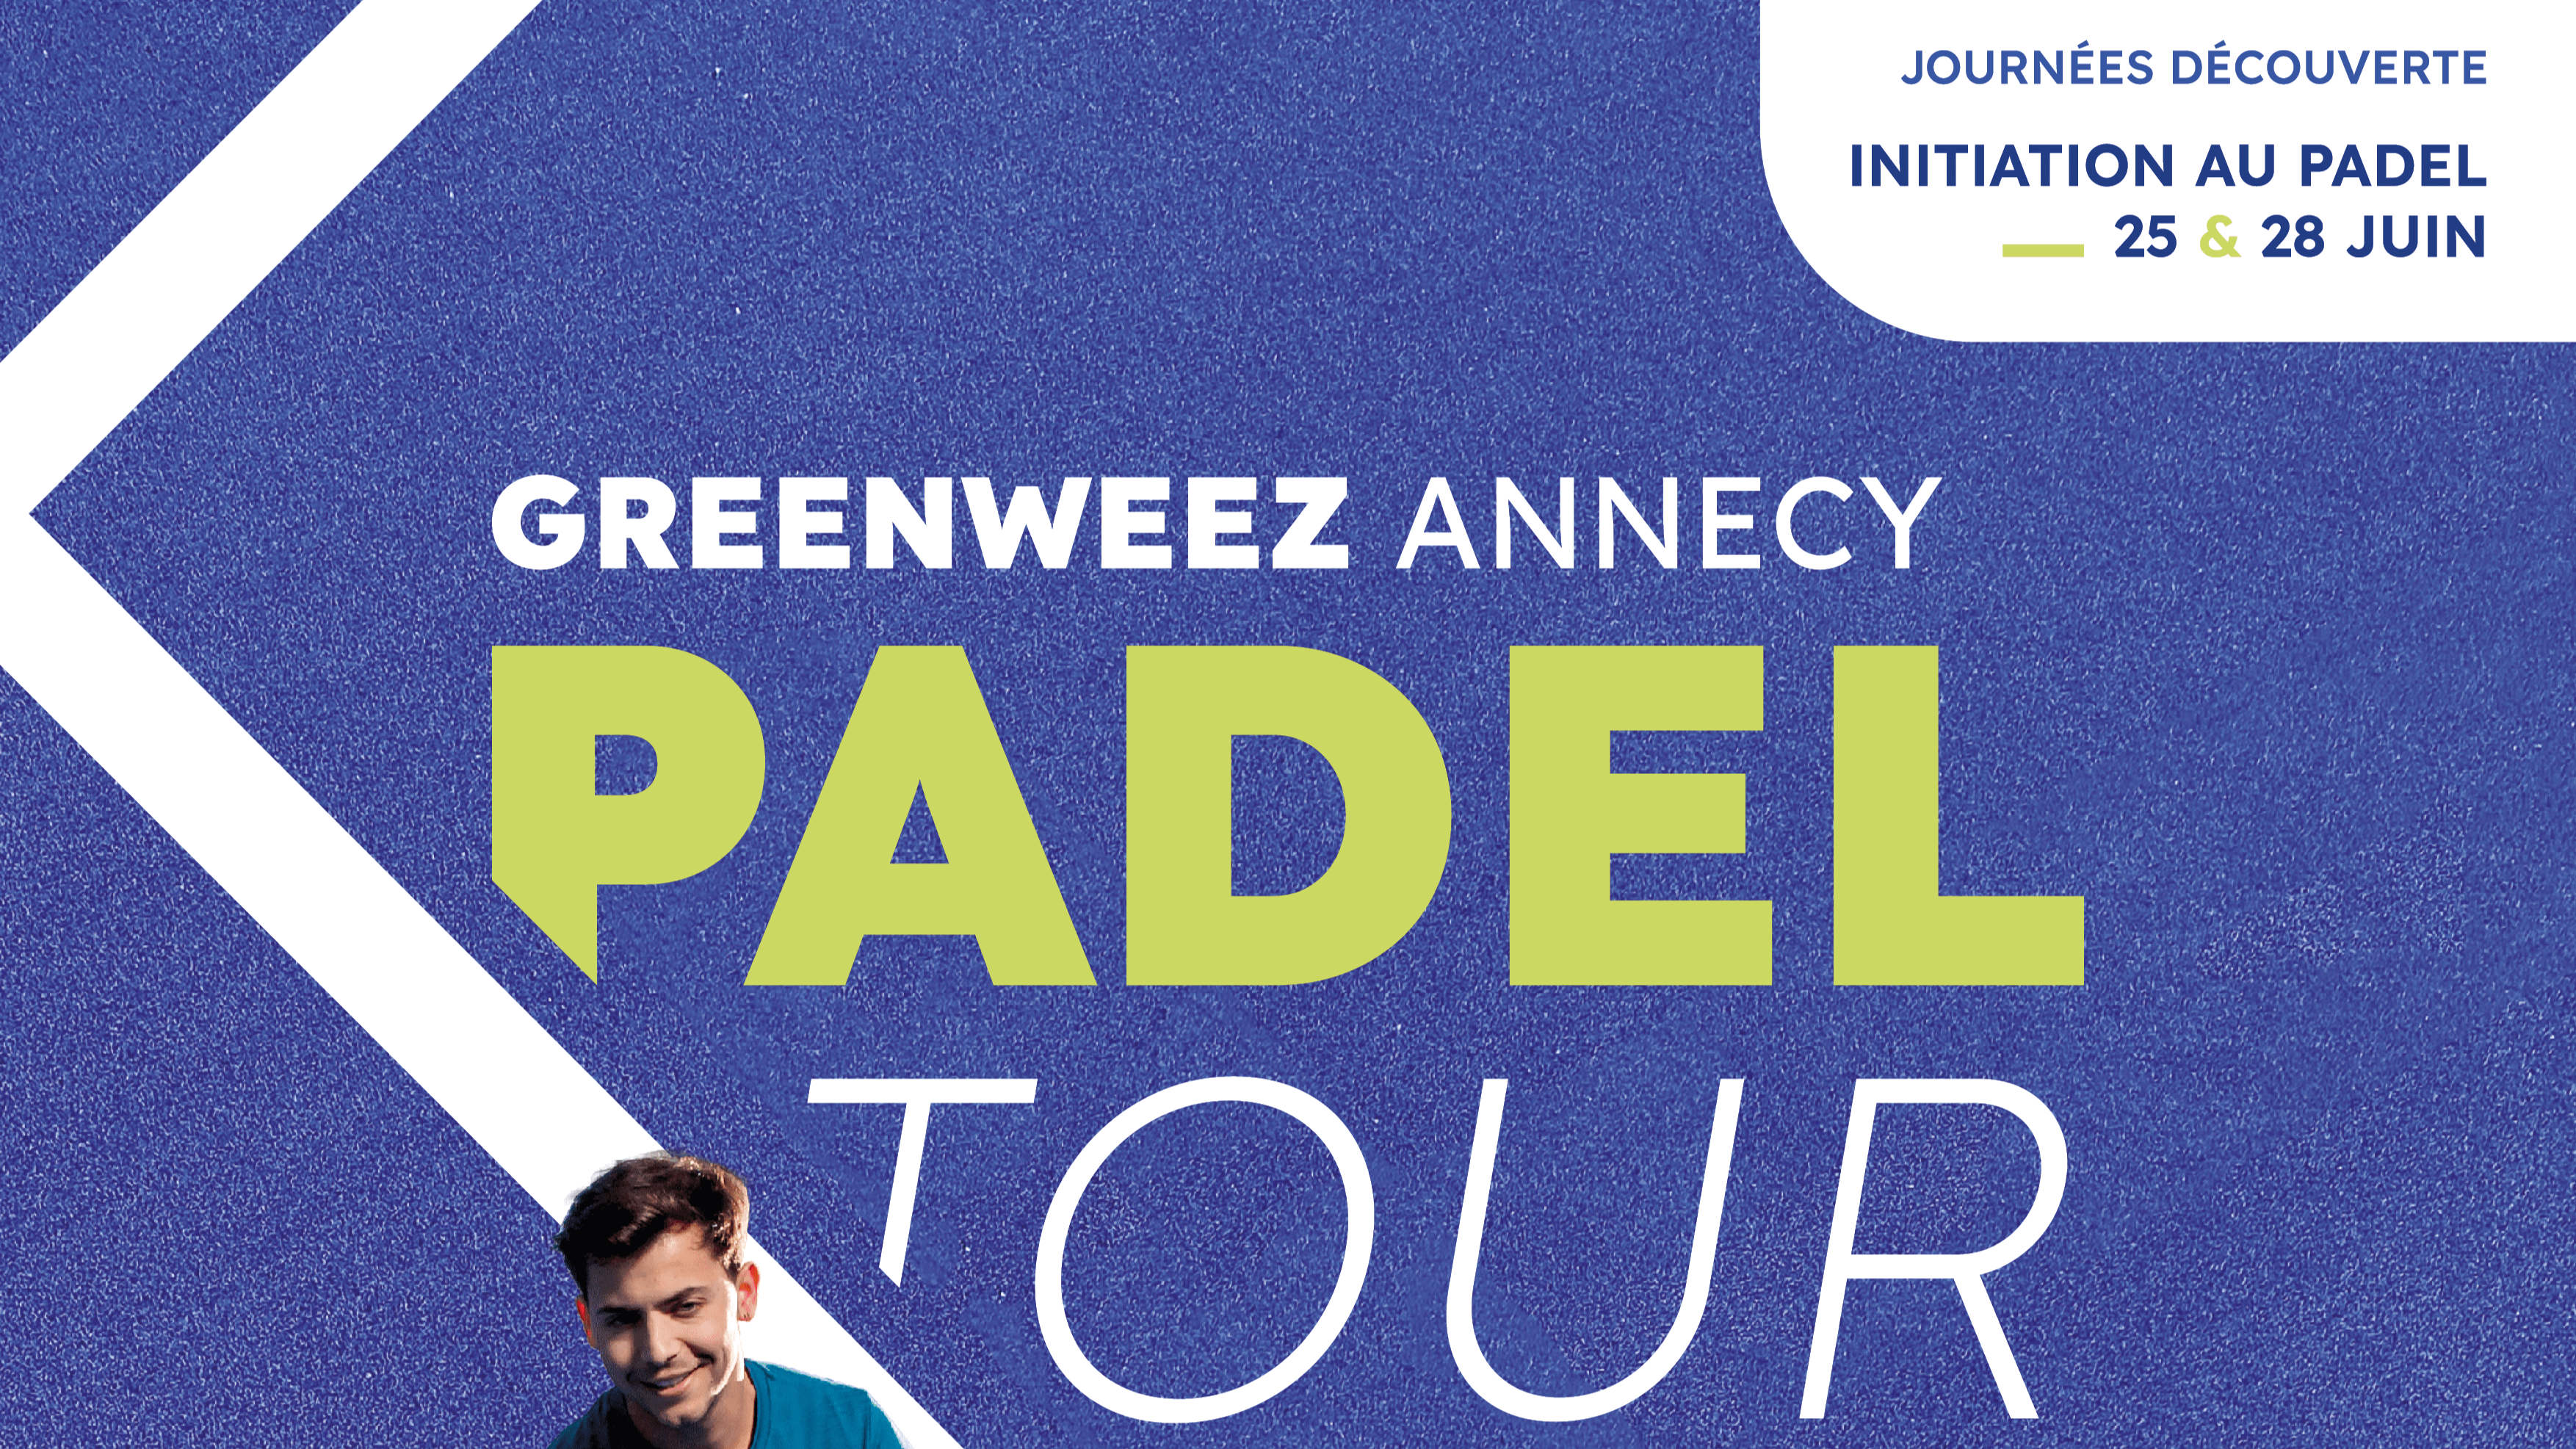 Greenweez Annecy Padel Tour se prepara para animar Haute-Savoie